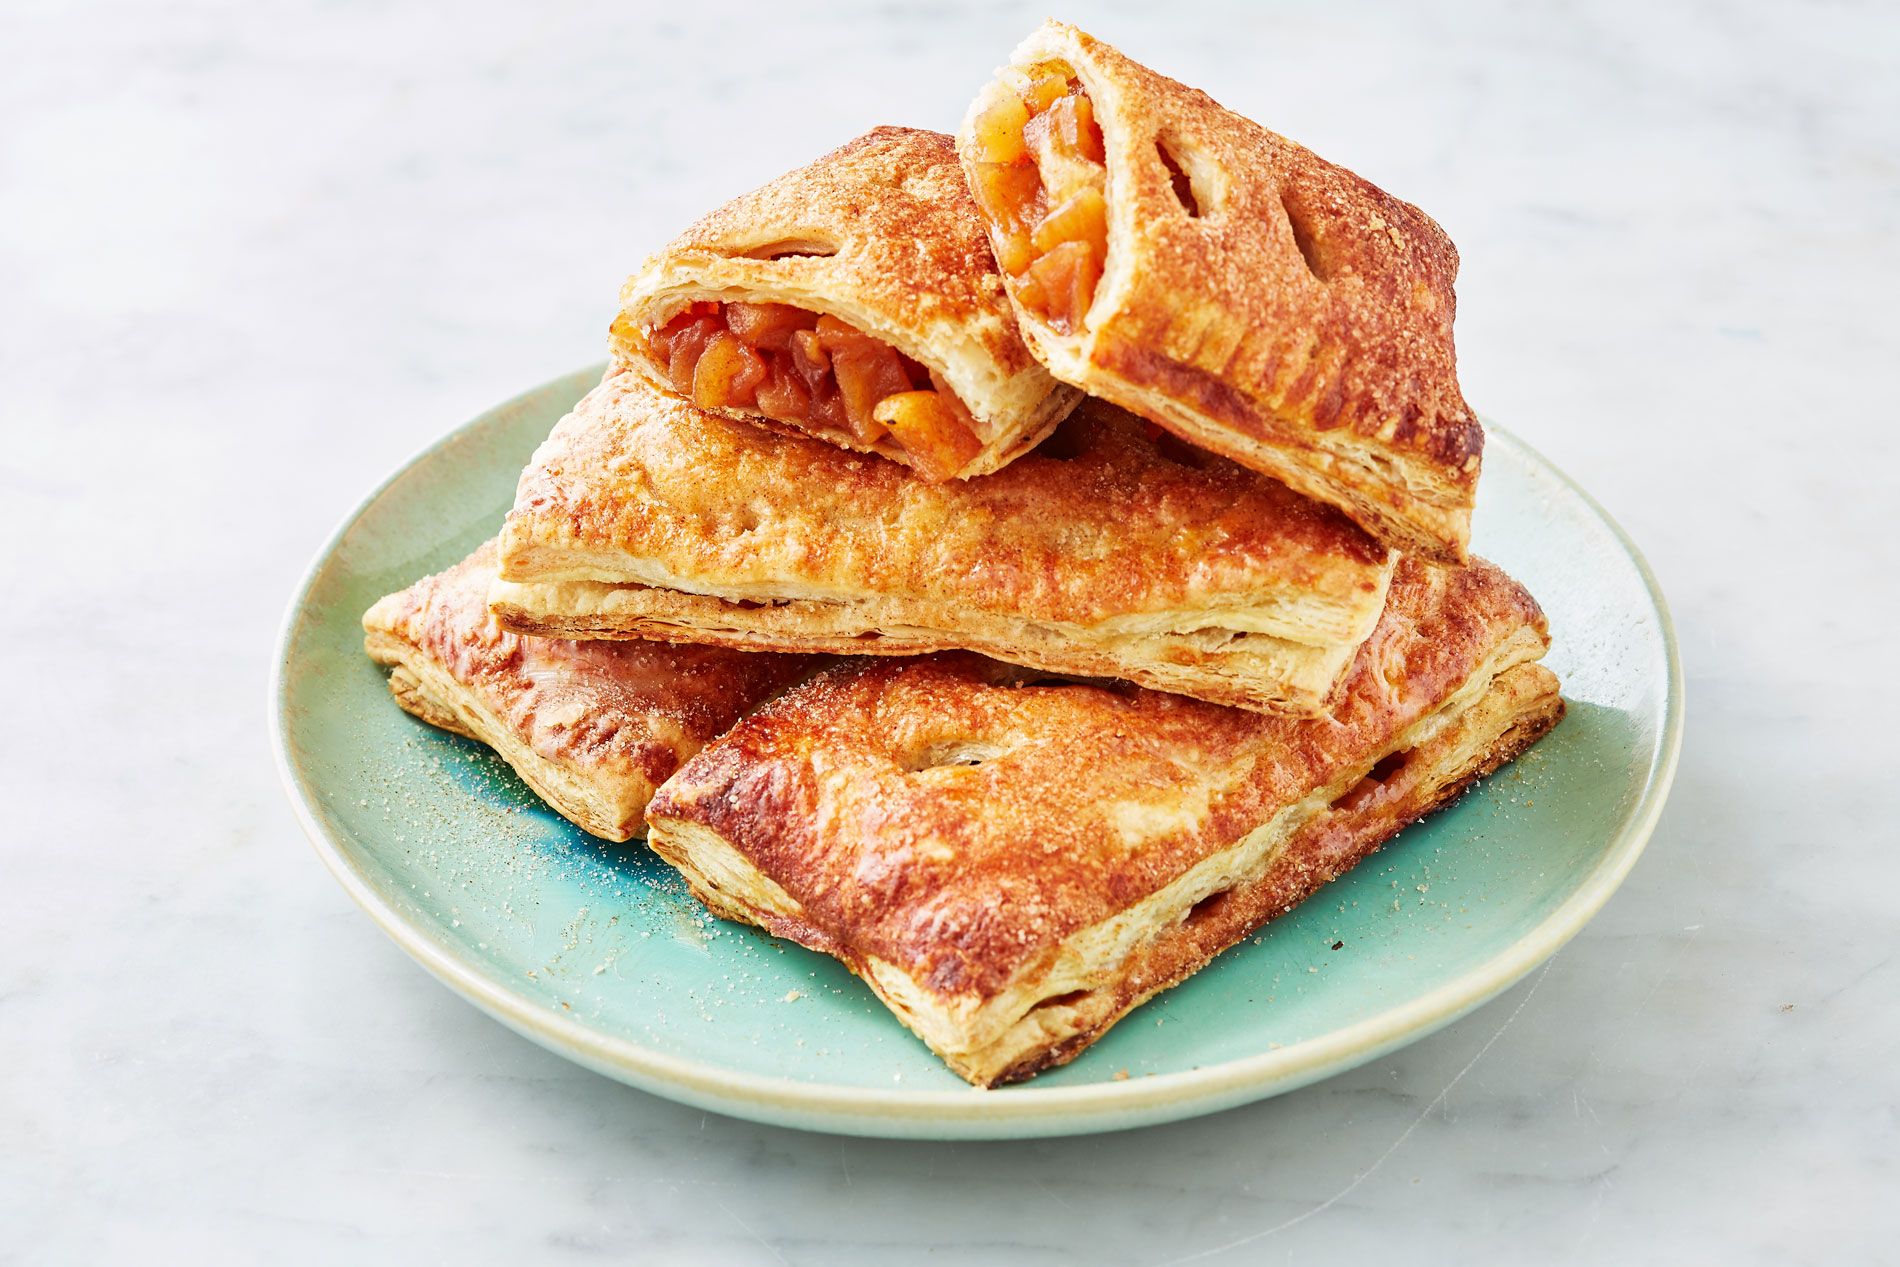 Steps to Prepare Apple Pie Mcdonalds Recipe